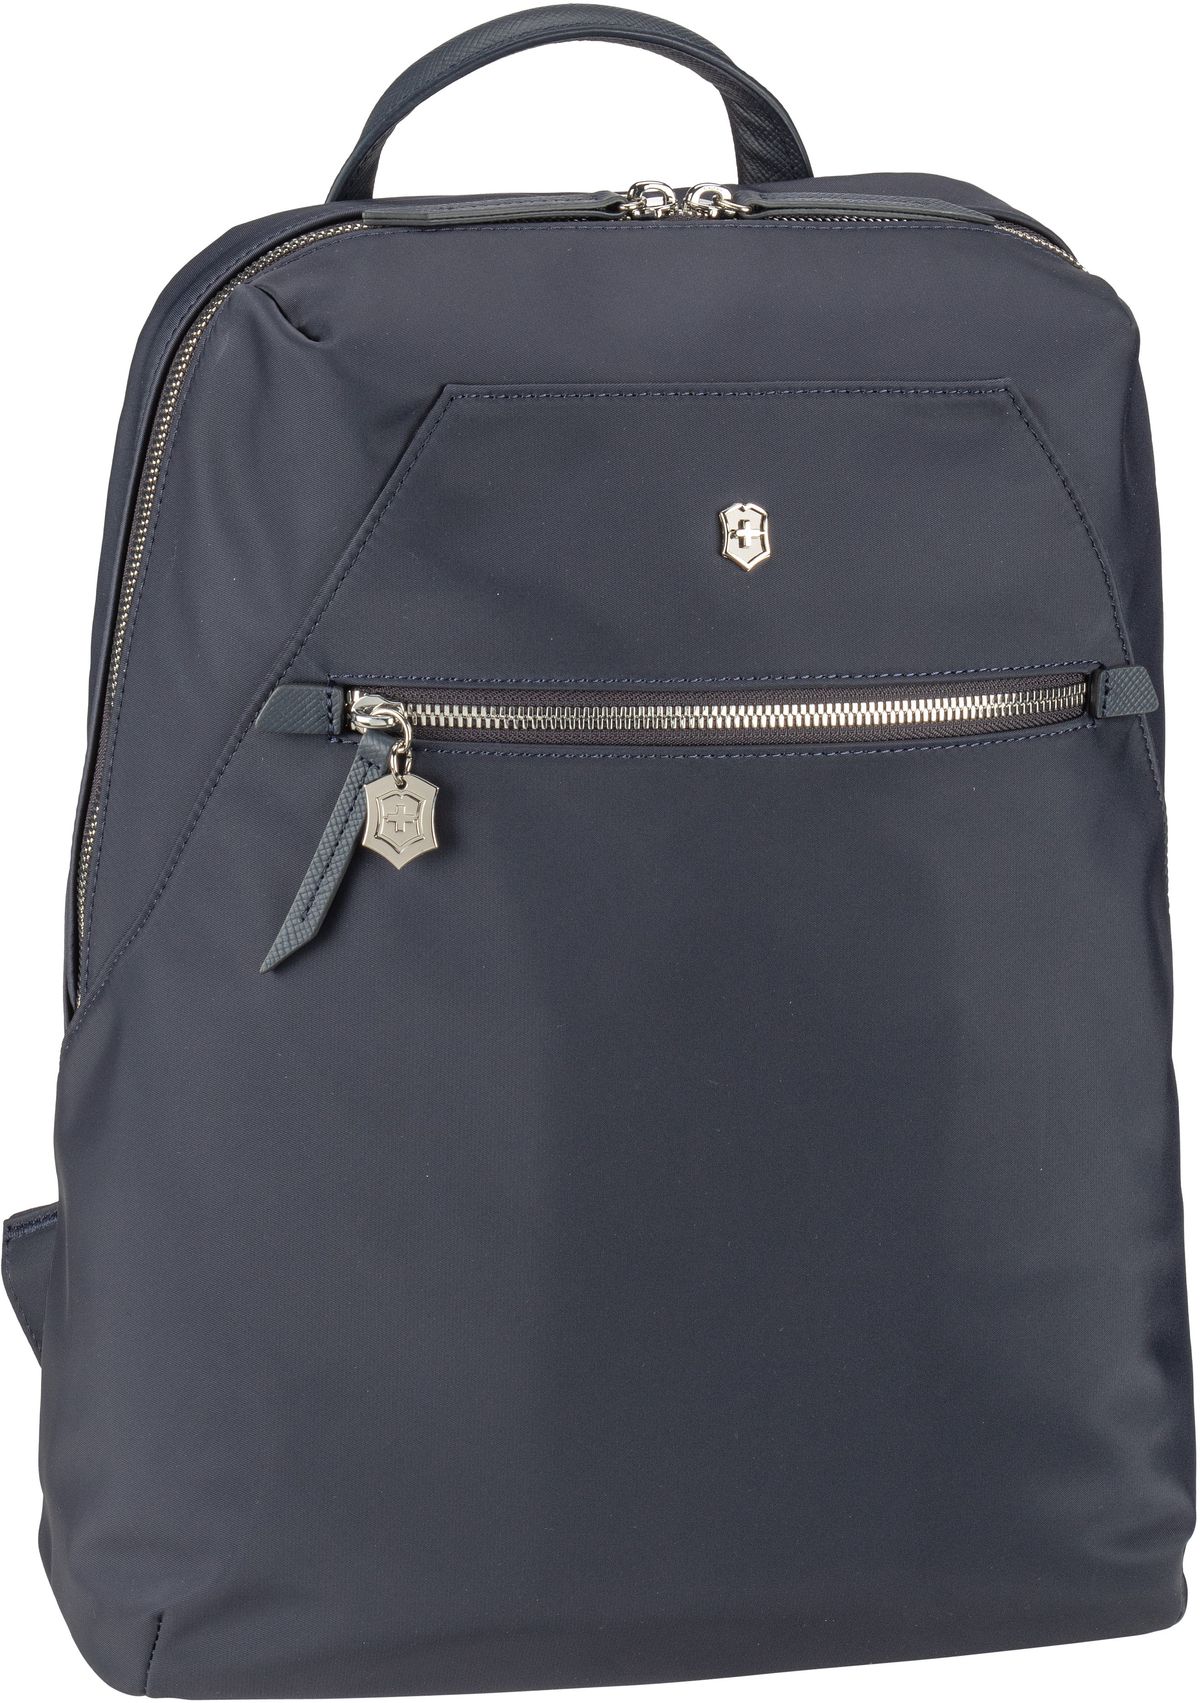 Victorinox Victoria Signature Compact Backpack  in Navy (16 Liter), Rucksack / Backpack